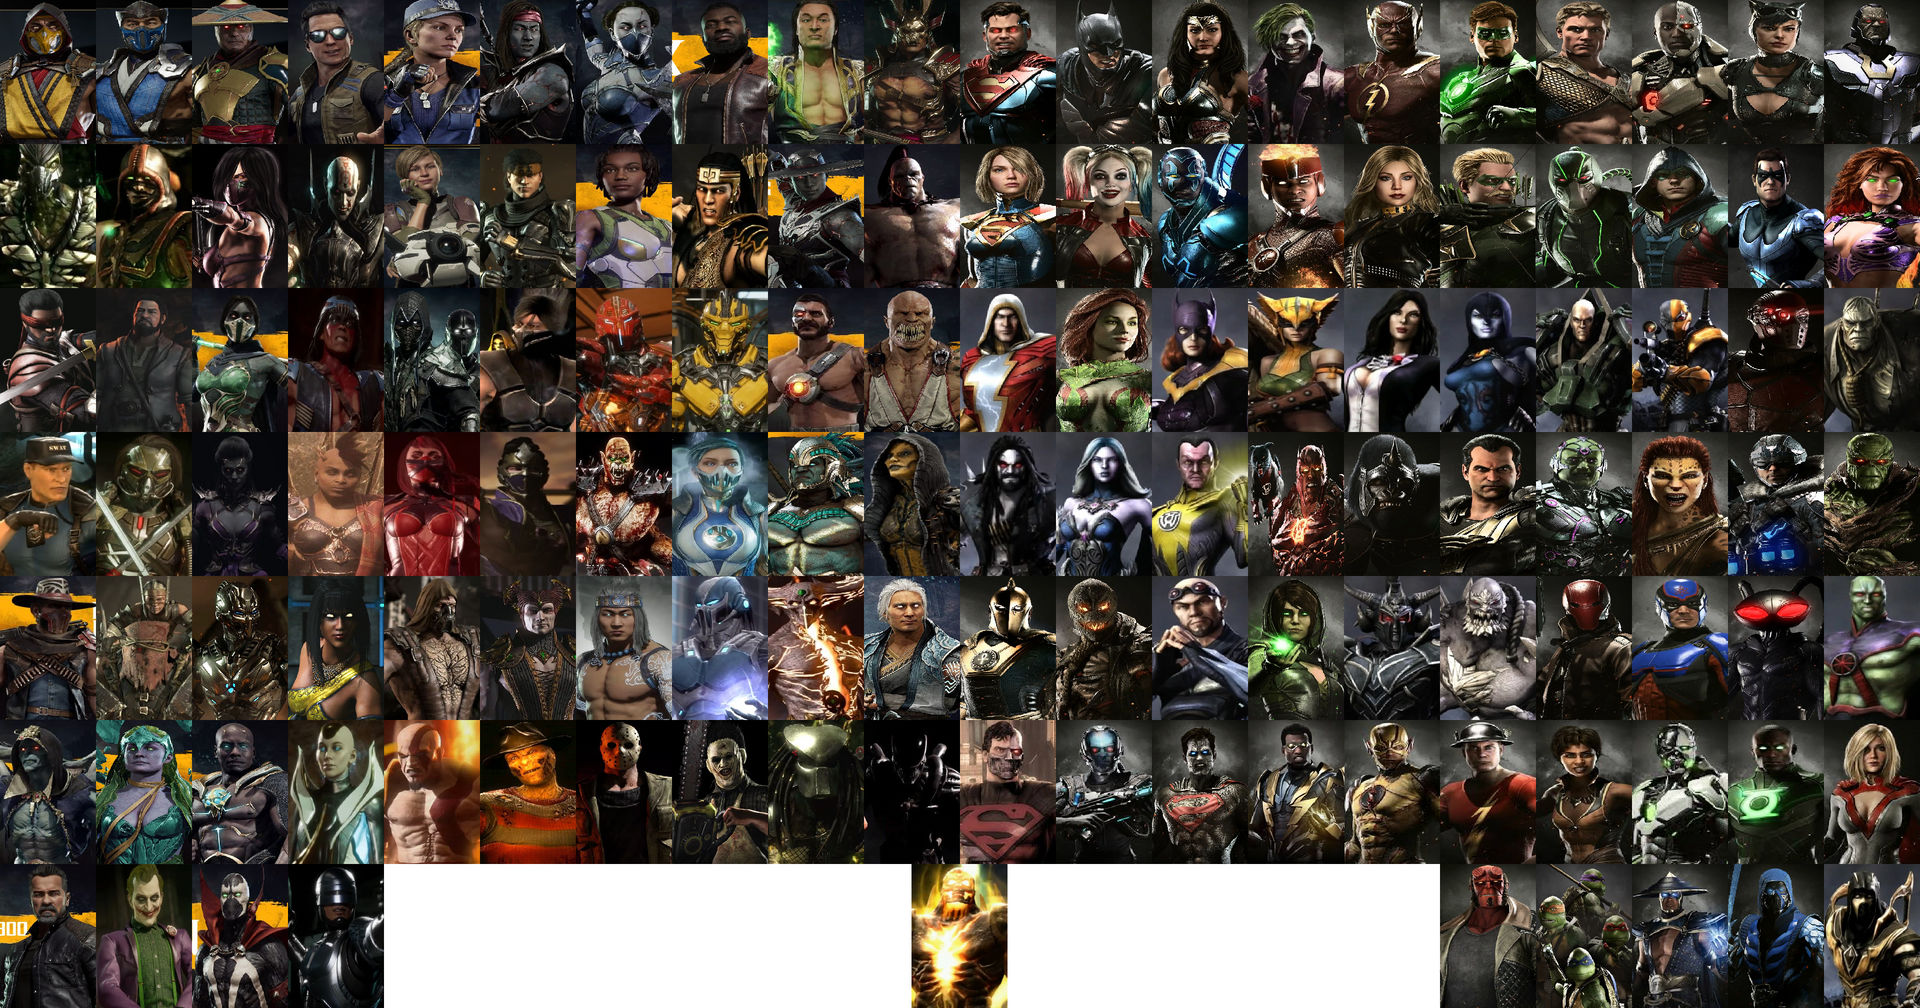 Mortal Kombat DLC Characters by MnstrFrc on DeviantArt